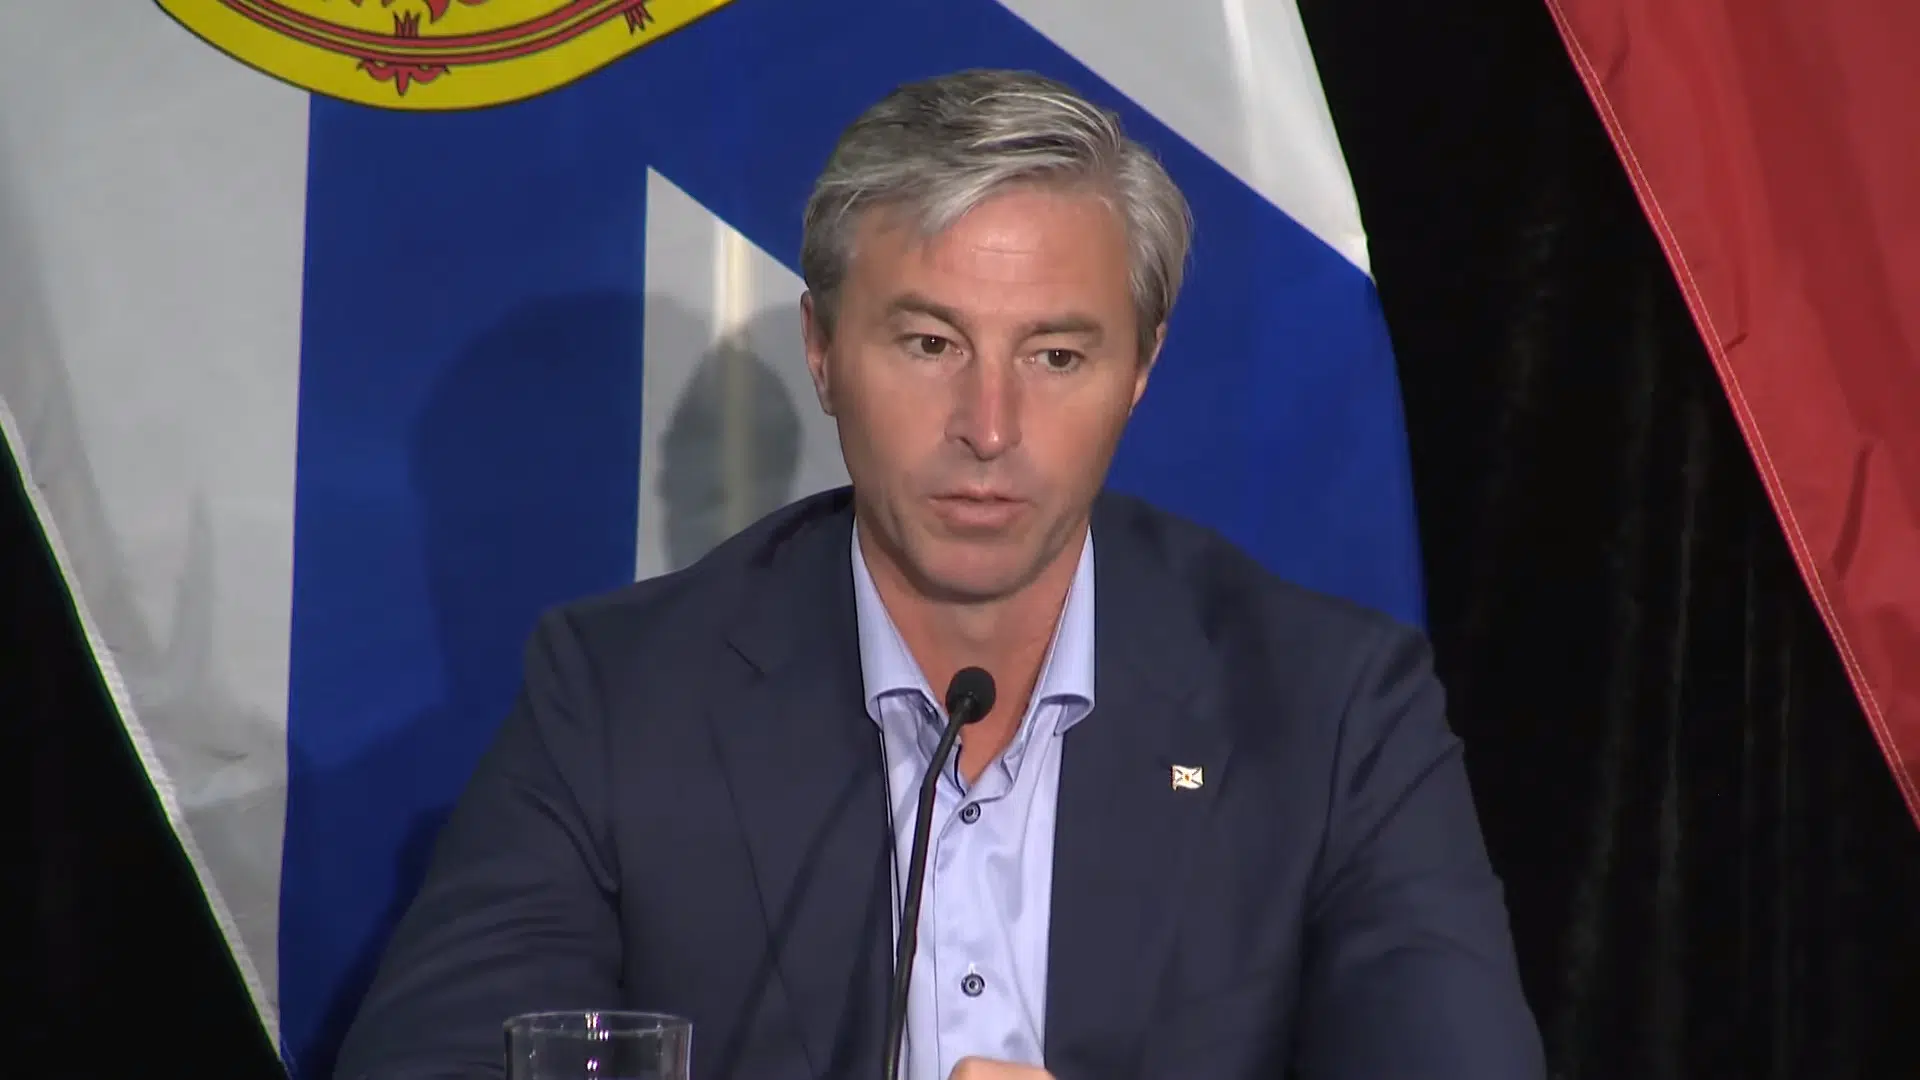 Premier says Nova Scotia's climate plans are better than a carbon tax